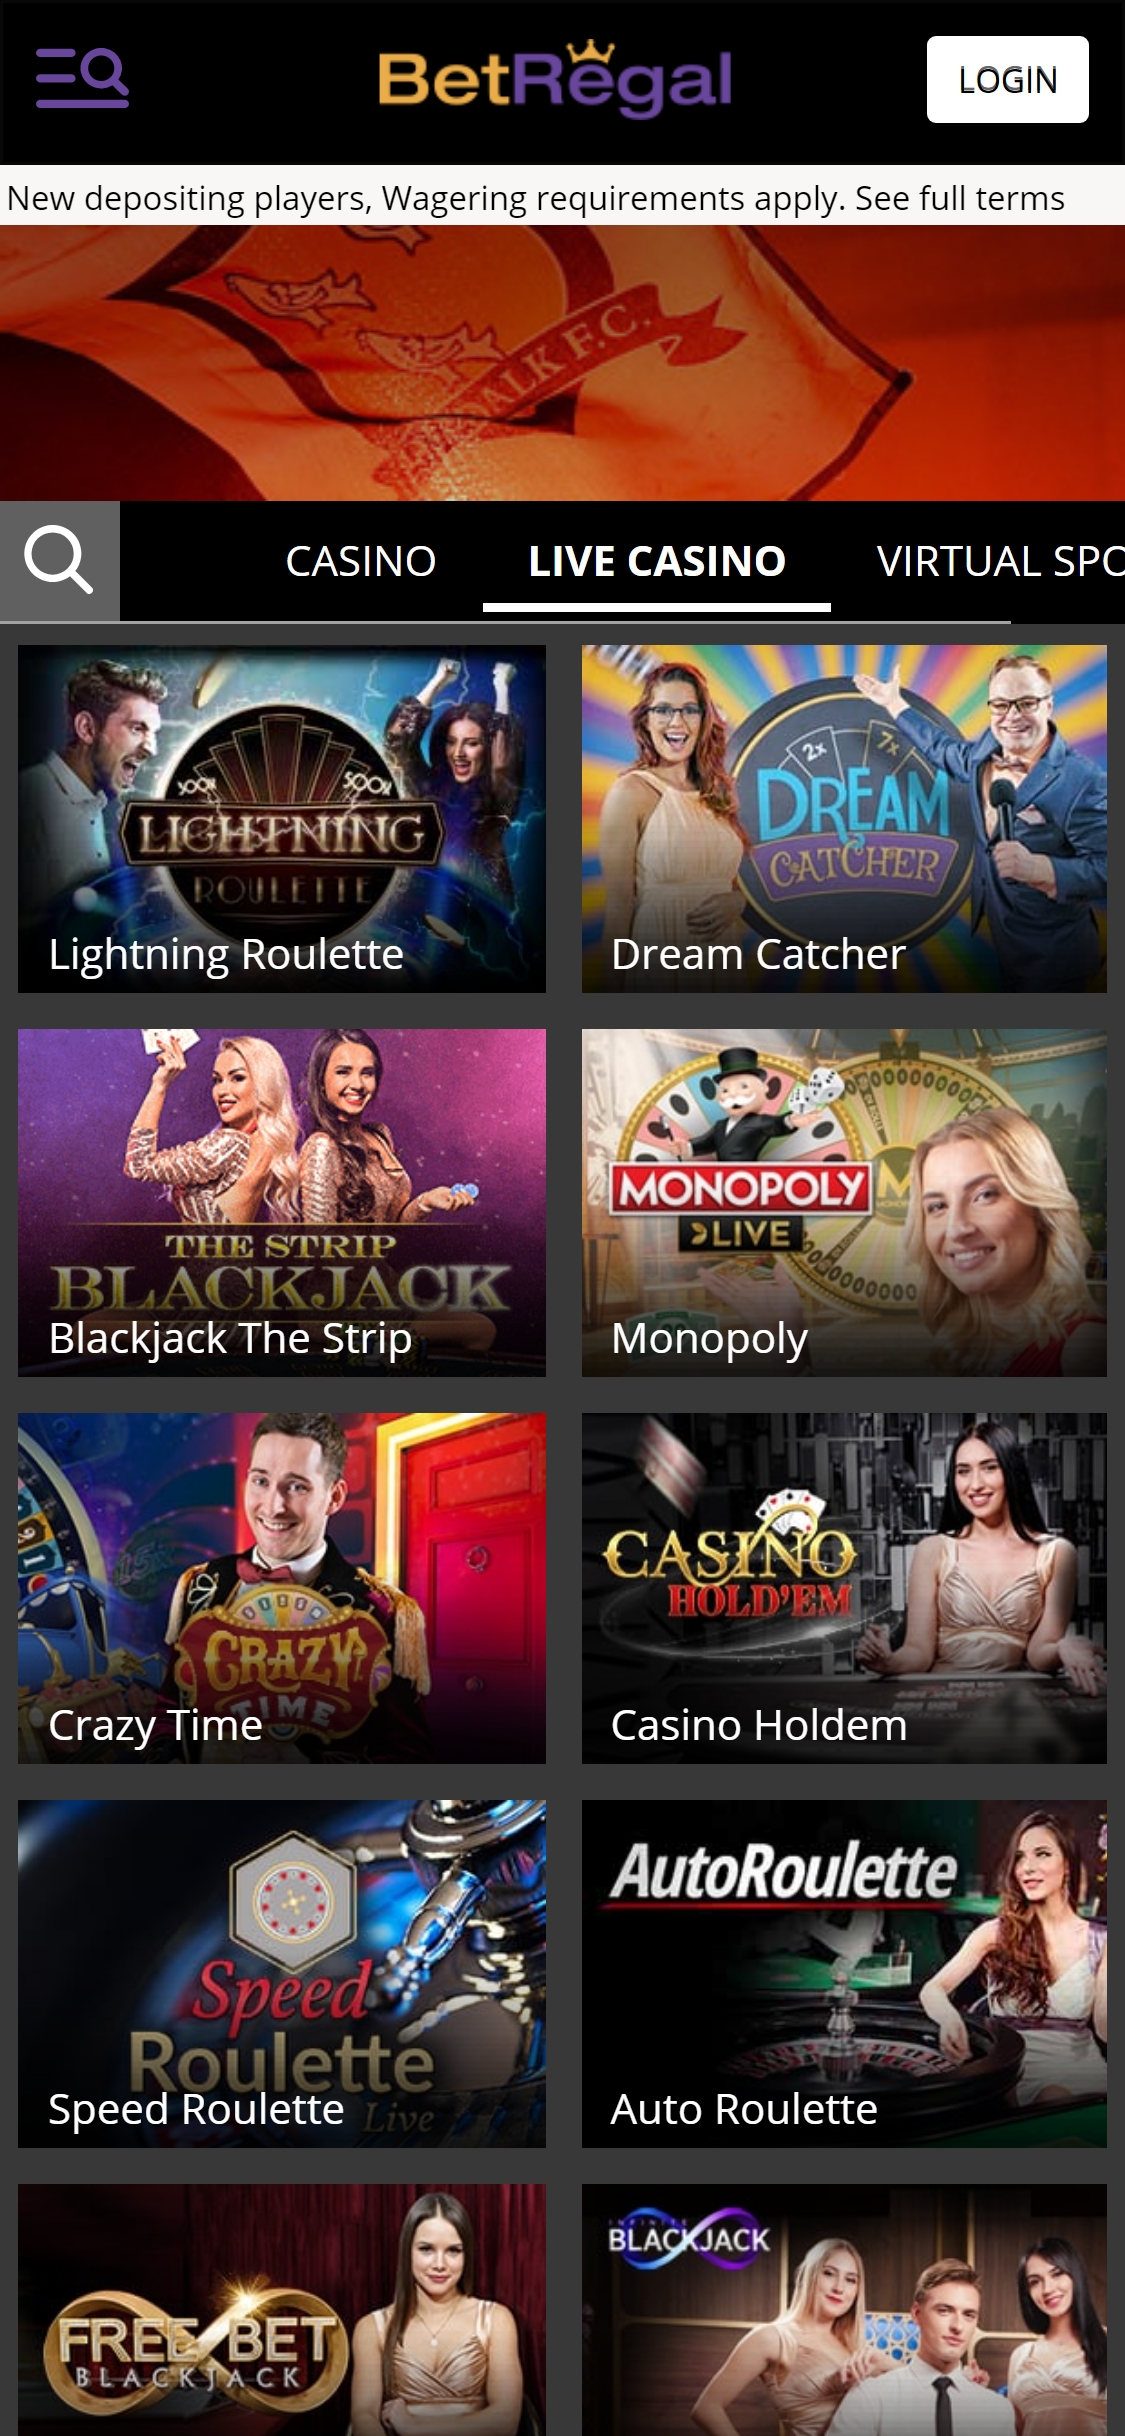 Betregal Casino Mobile Live Dealer Games Review